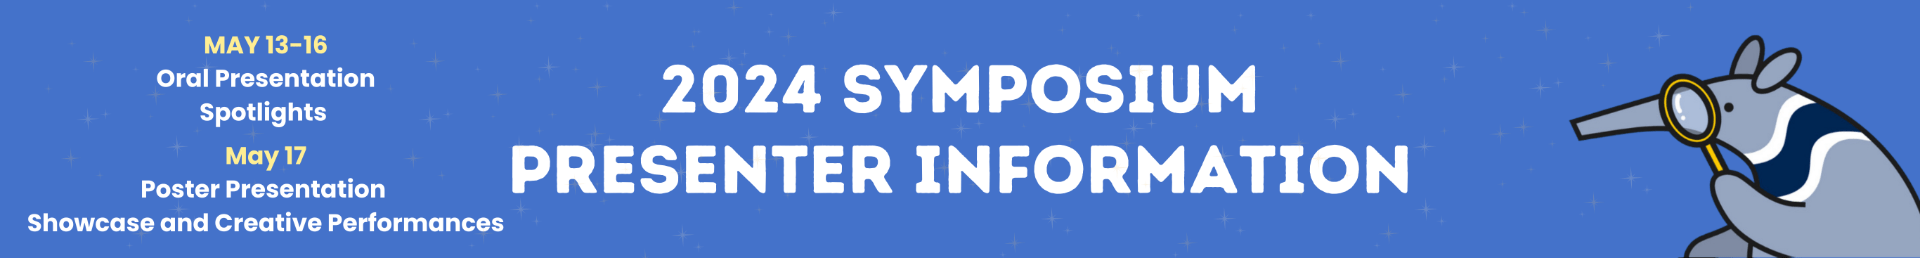 Symposium Presenter Information Webpage